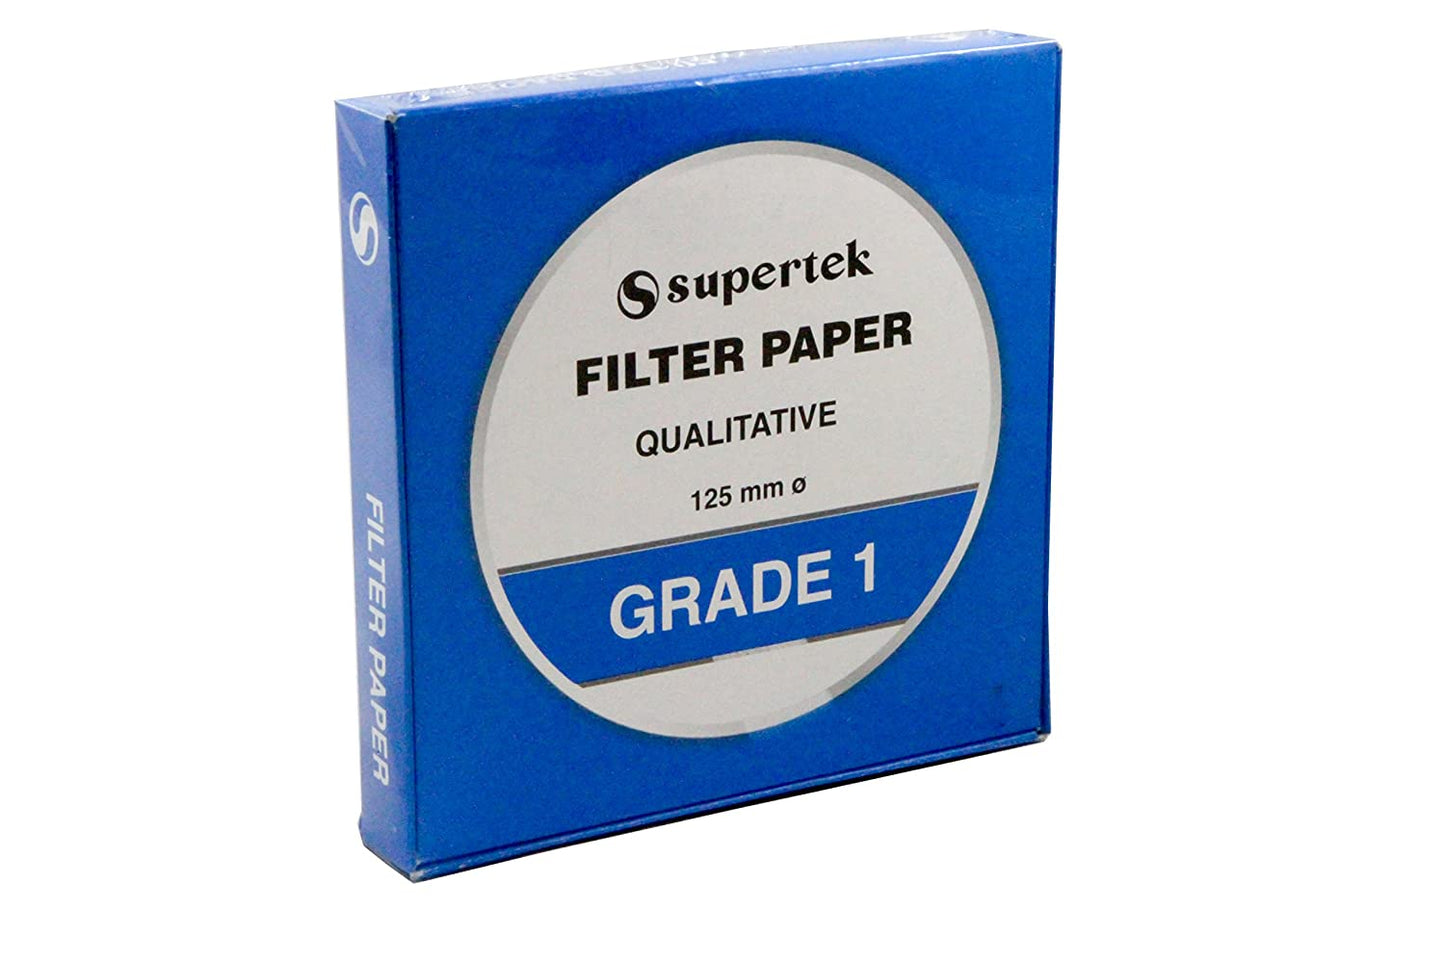 Filter Paper, Qualitative, Grade 1, 125 mm (Diameter) Pack of 100 Sheets